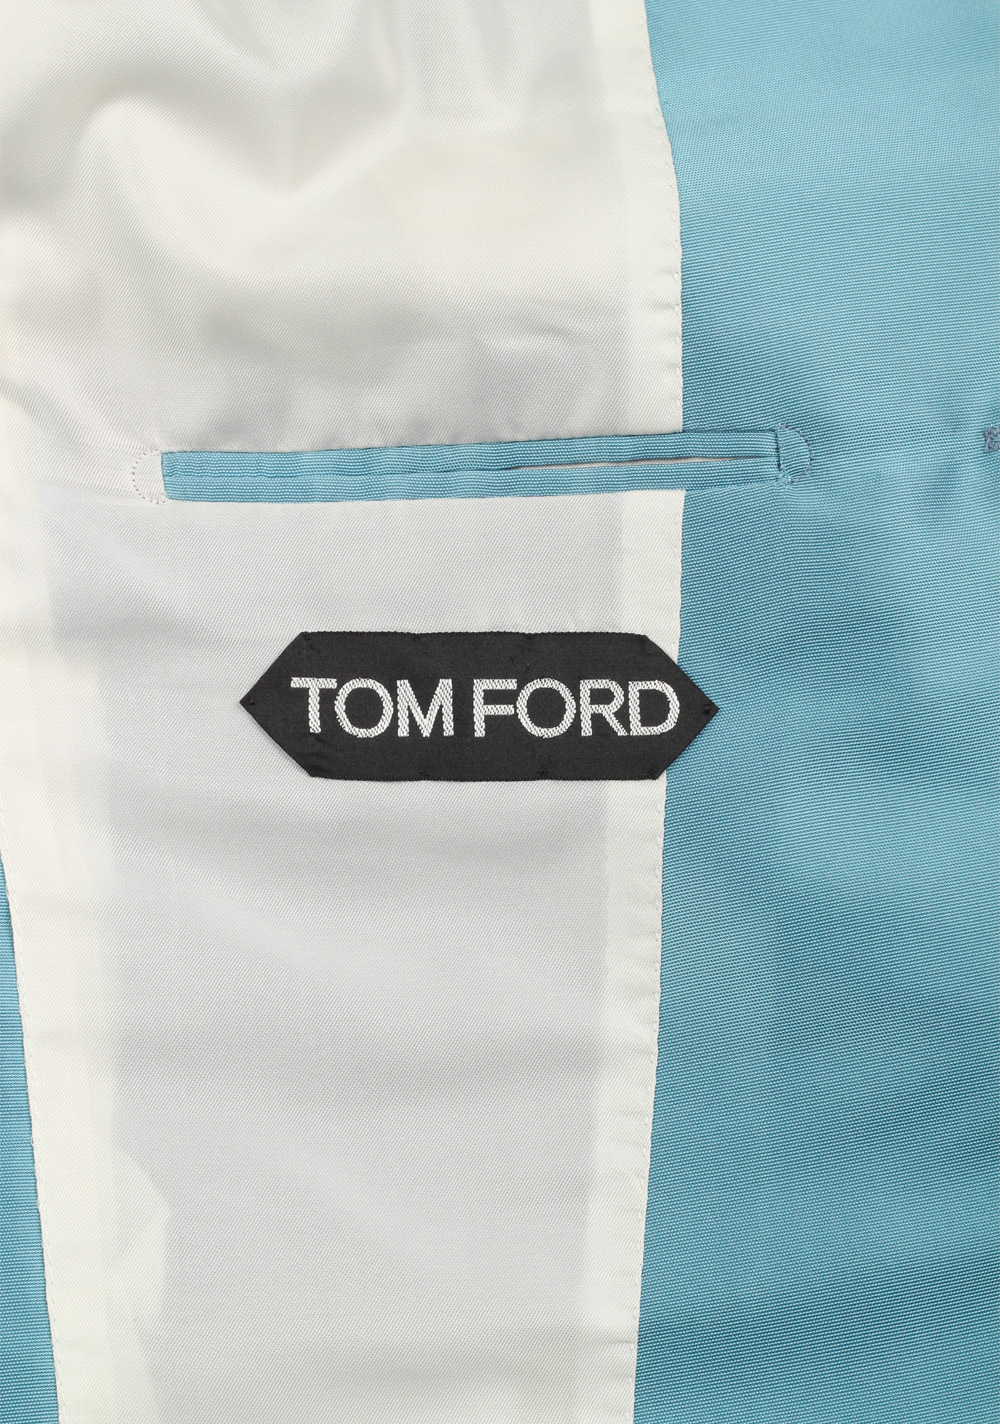 TOM FORD Atticus Teal Silk Suit Size 46 / 36R U.S. | Costume Limité